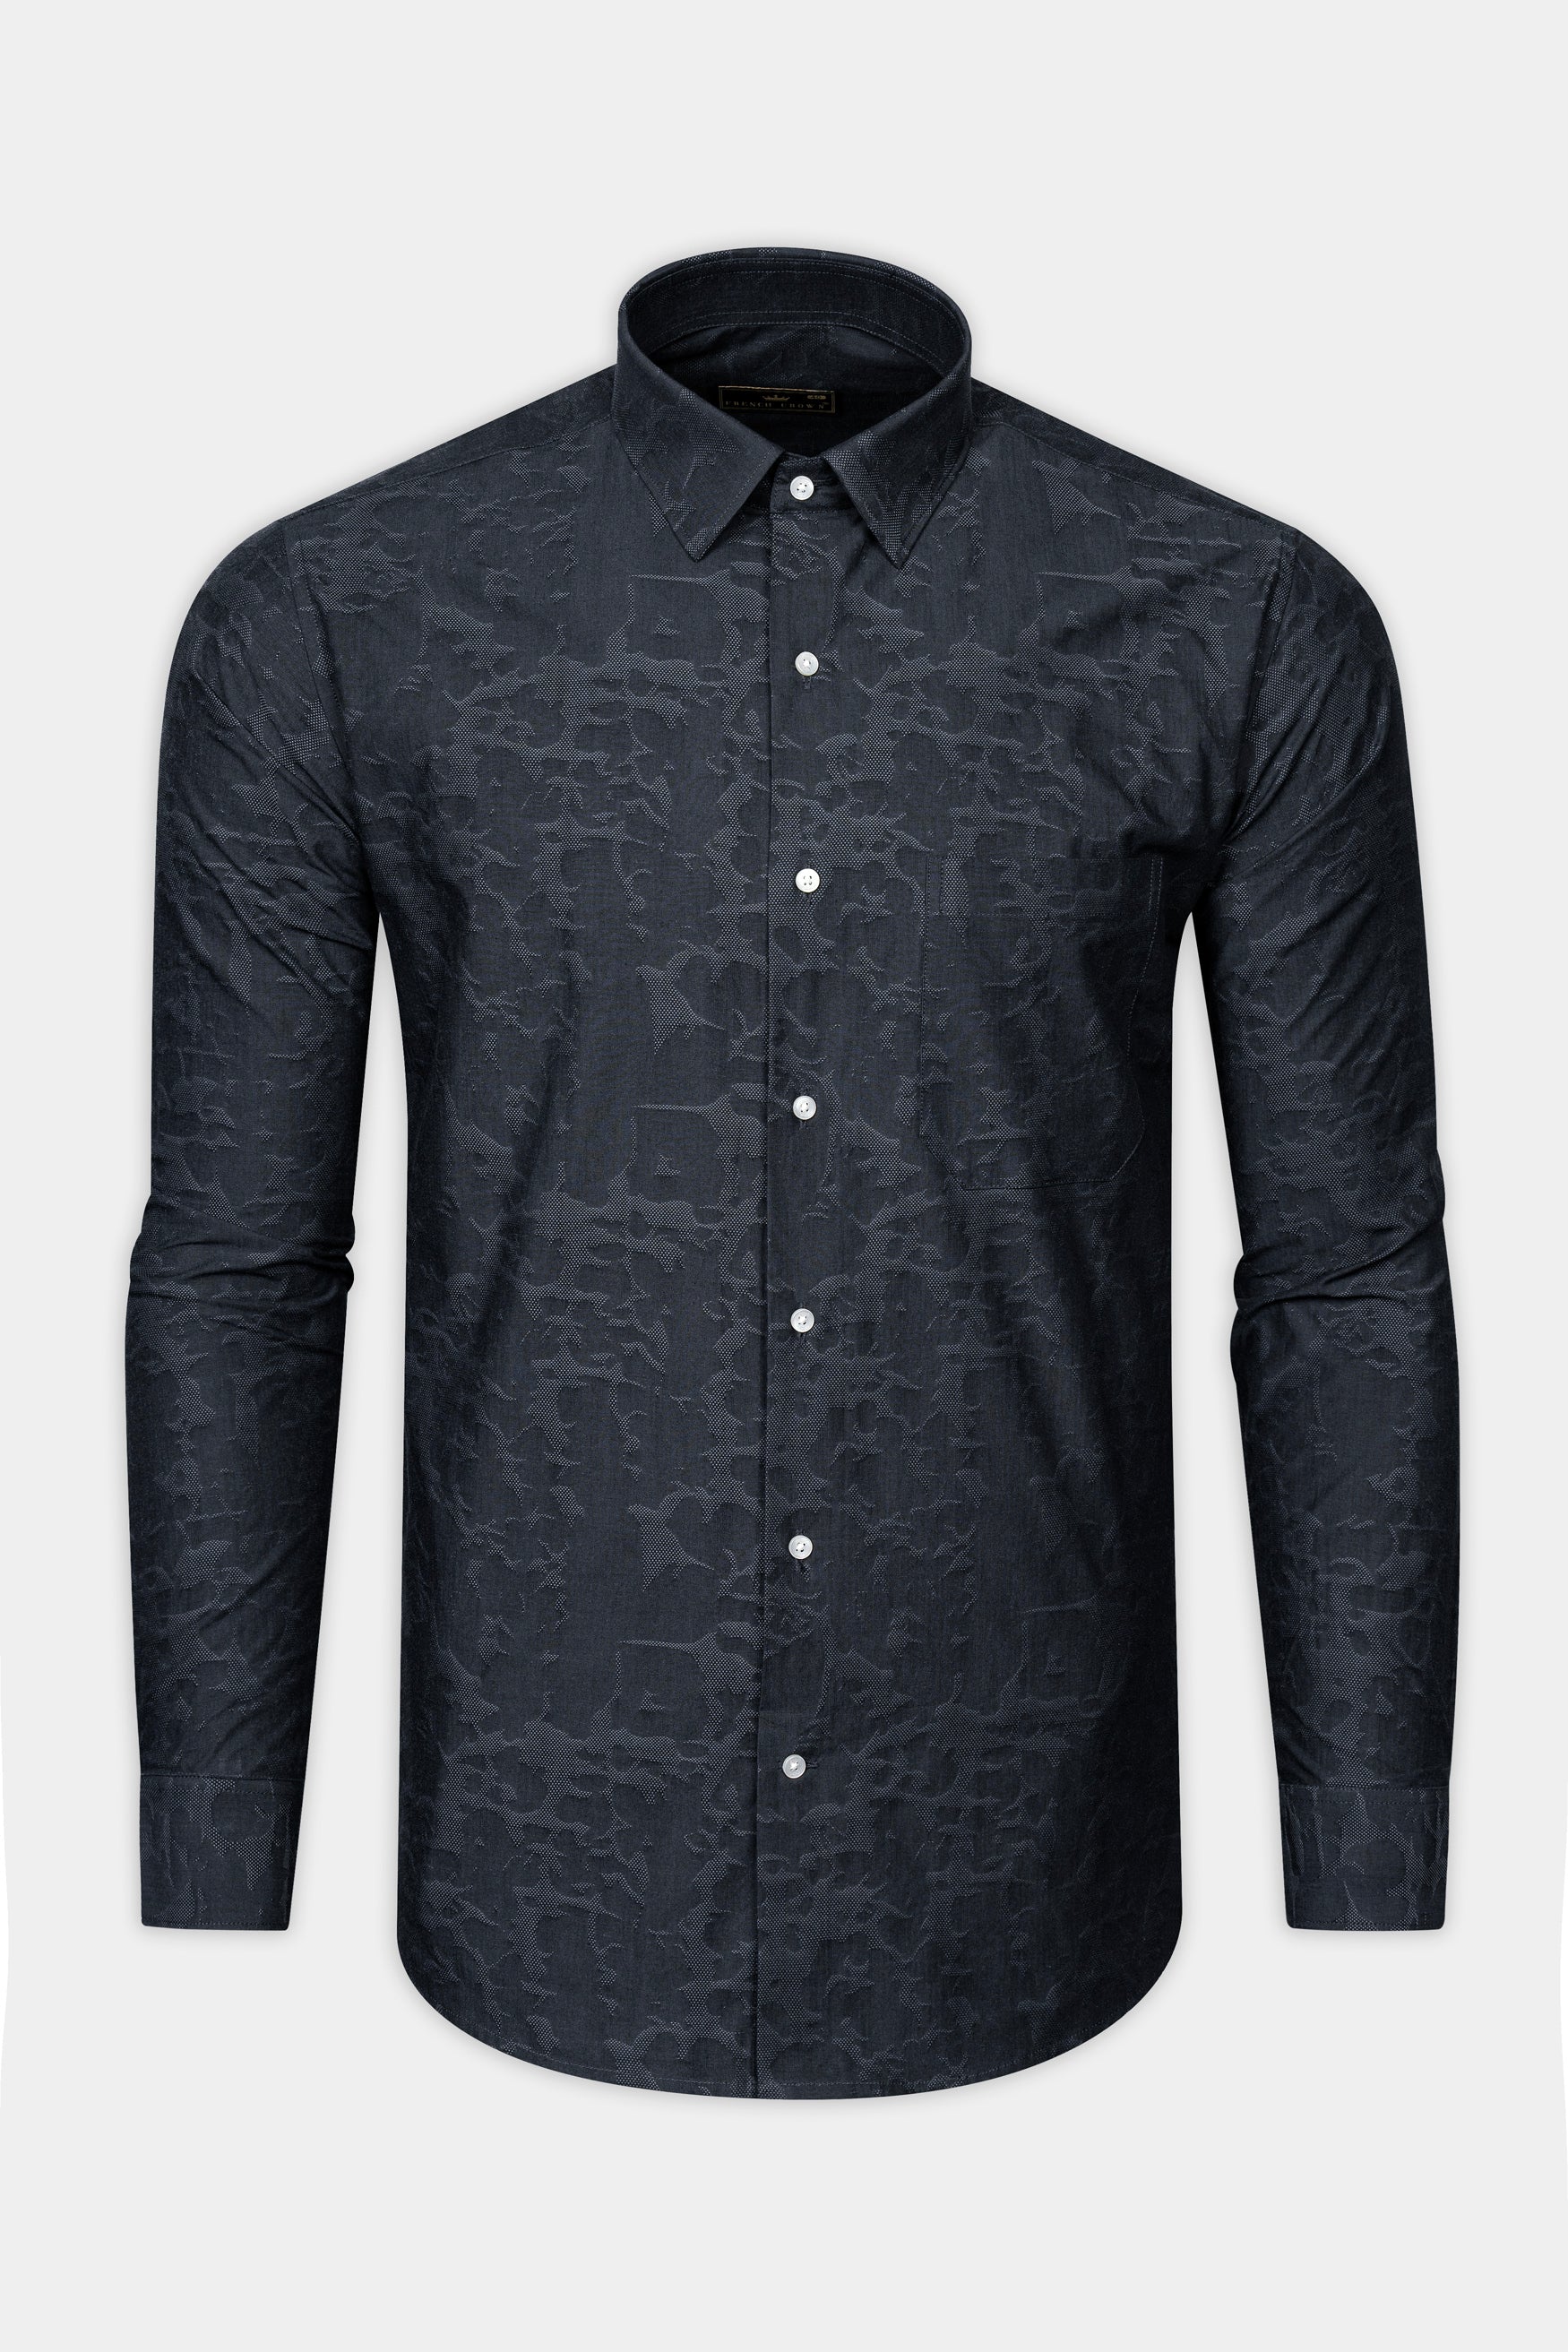 Shark Grey Jacquard Textured Premium Giza Cotton Shirt